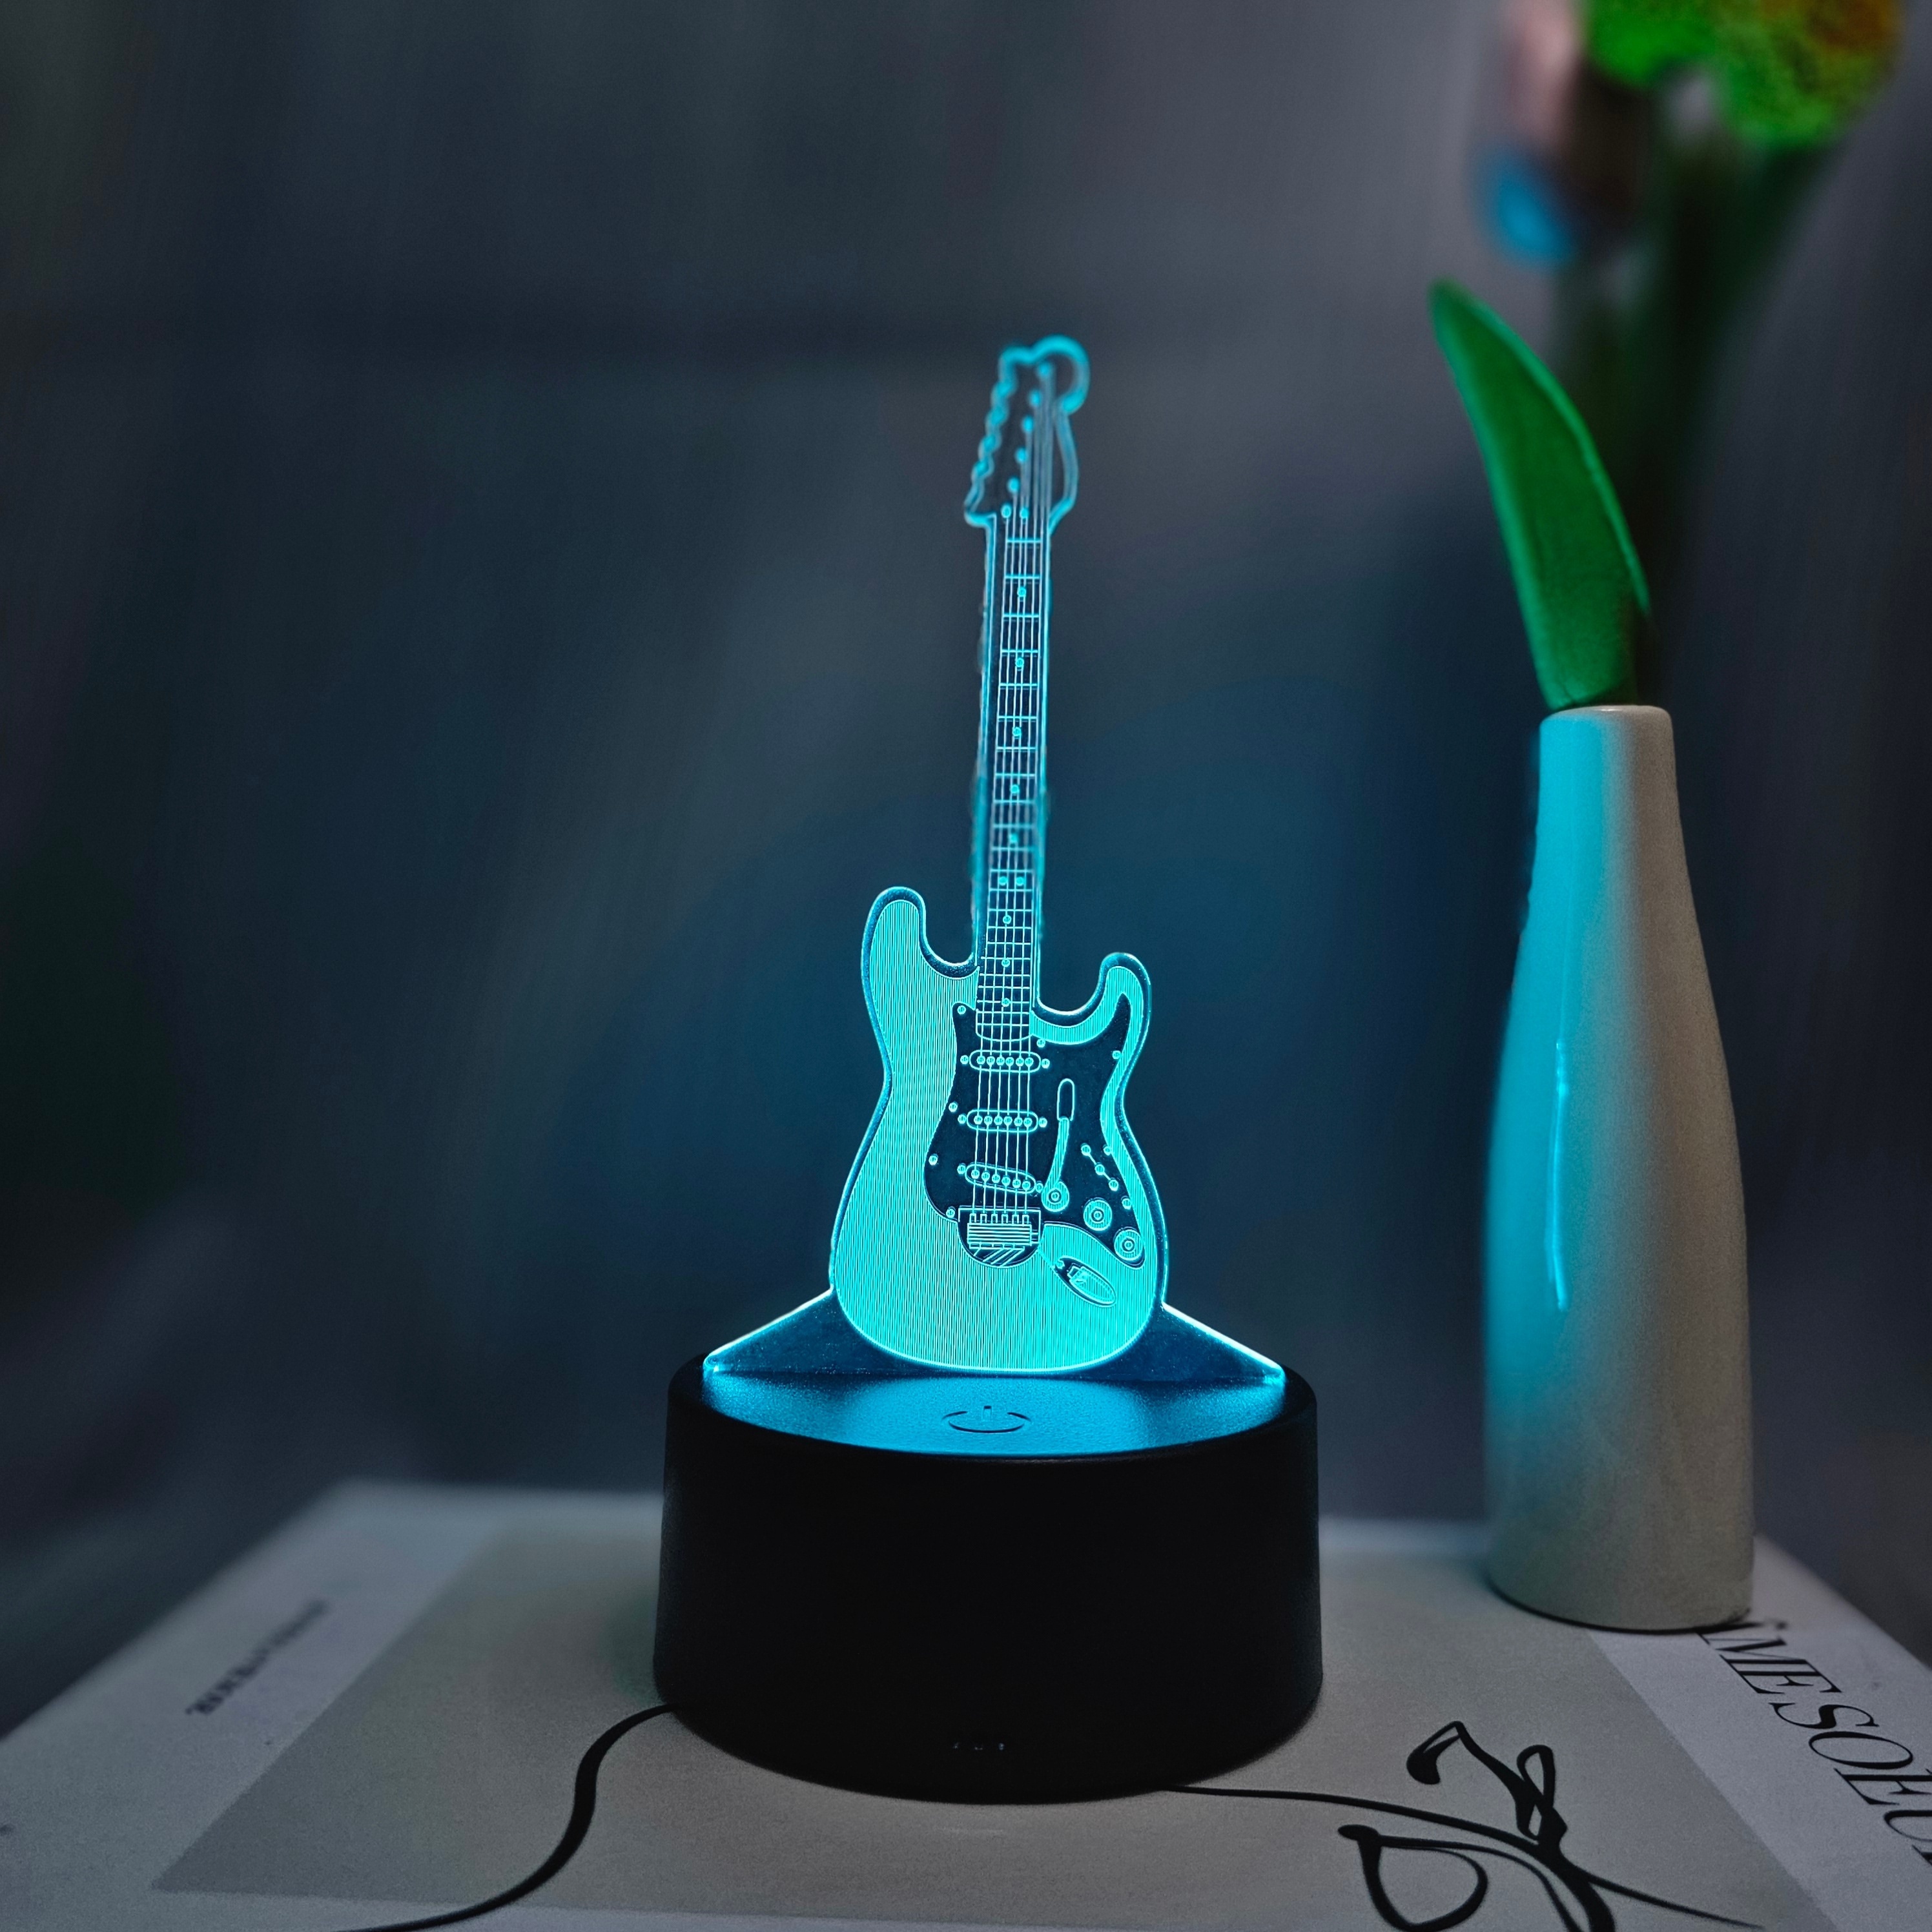 

1pc 3d Guitar Shape Night Light, 7-color Touch Adjustable Light + White Monochrome Warm Light, Holiday Gift For Family Friends, Room Desktop Decoration Atmosphere Light.